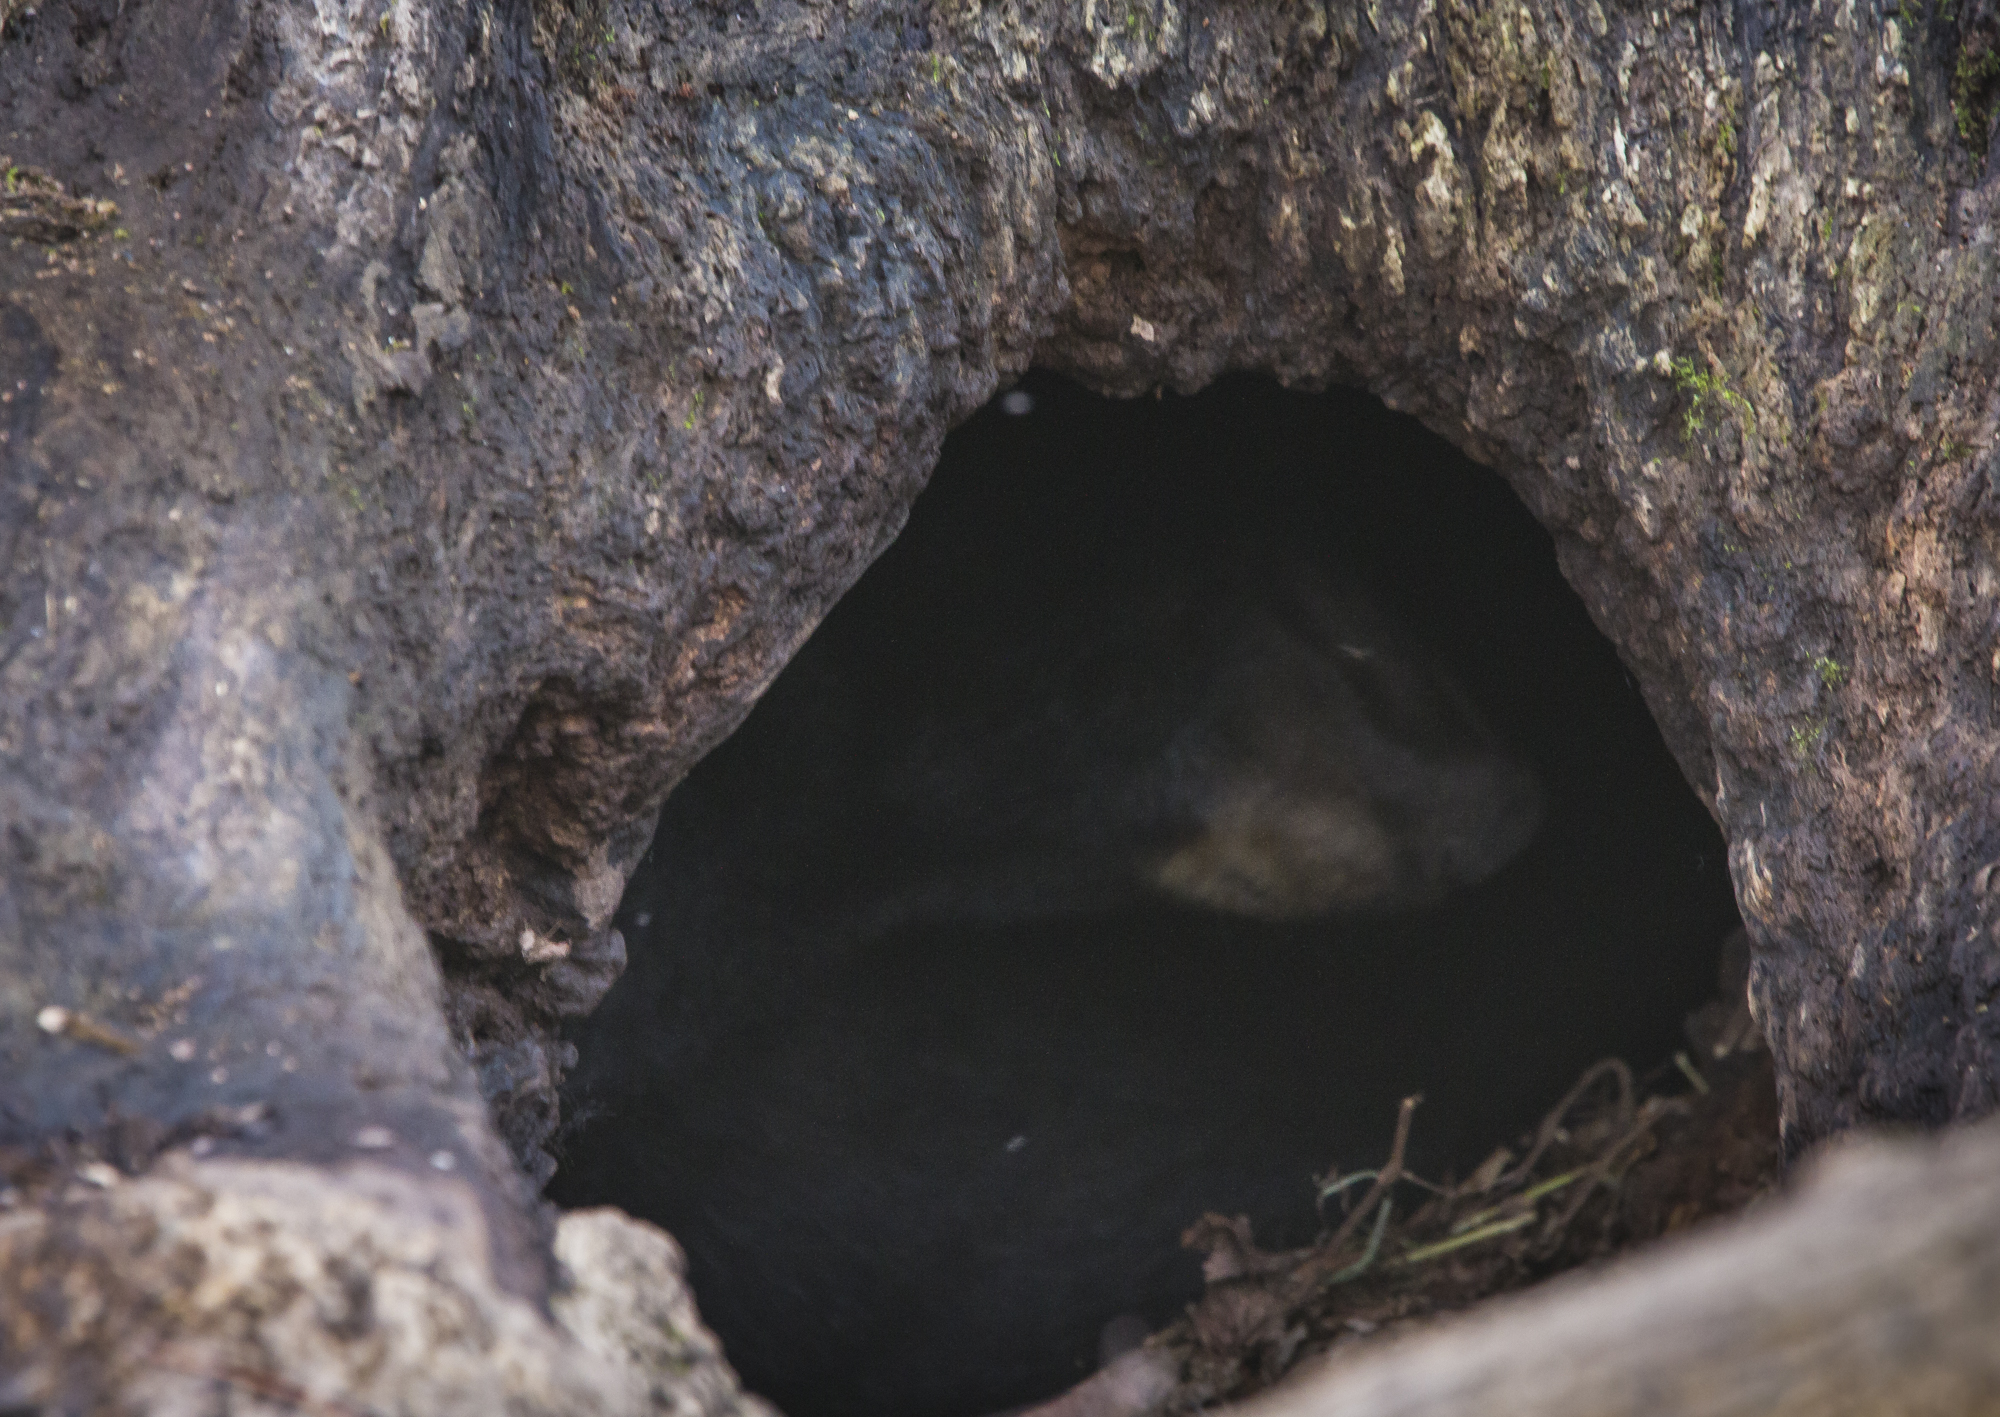 Black bear in tree base - Dowland pic